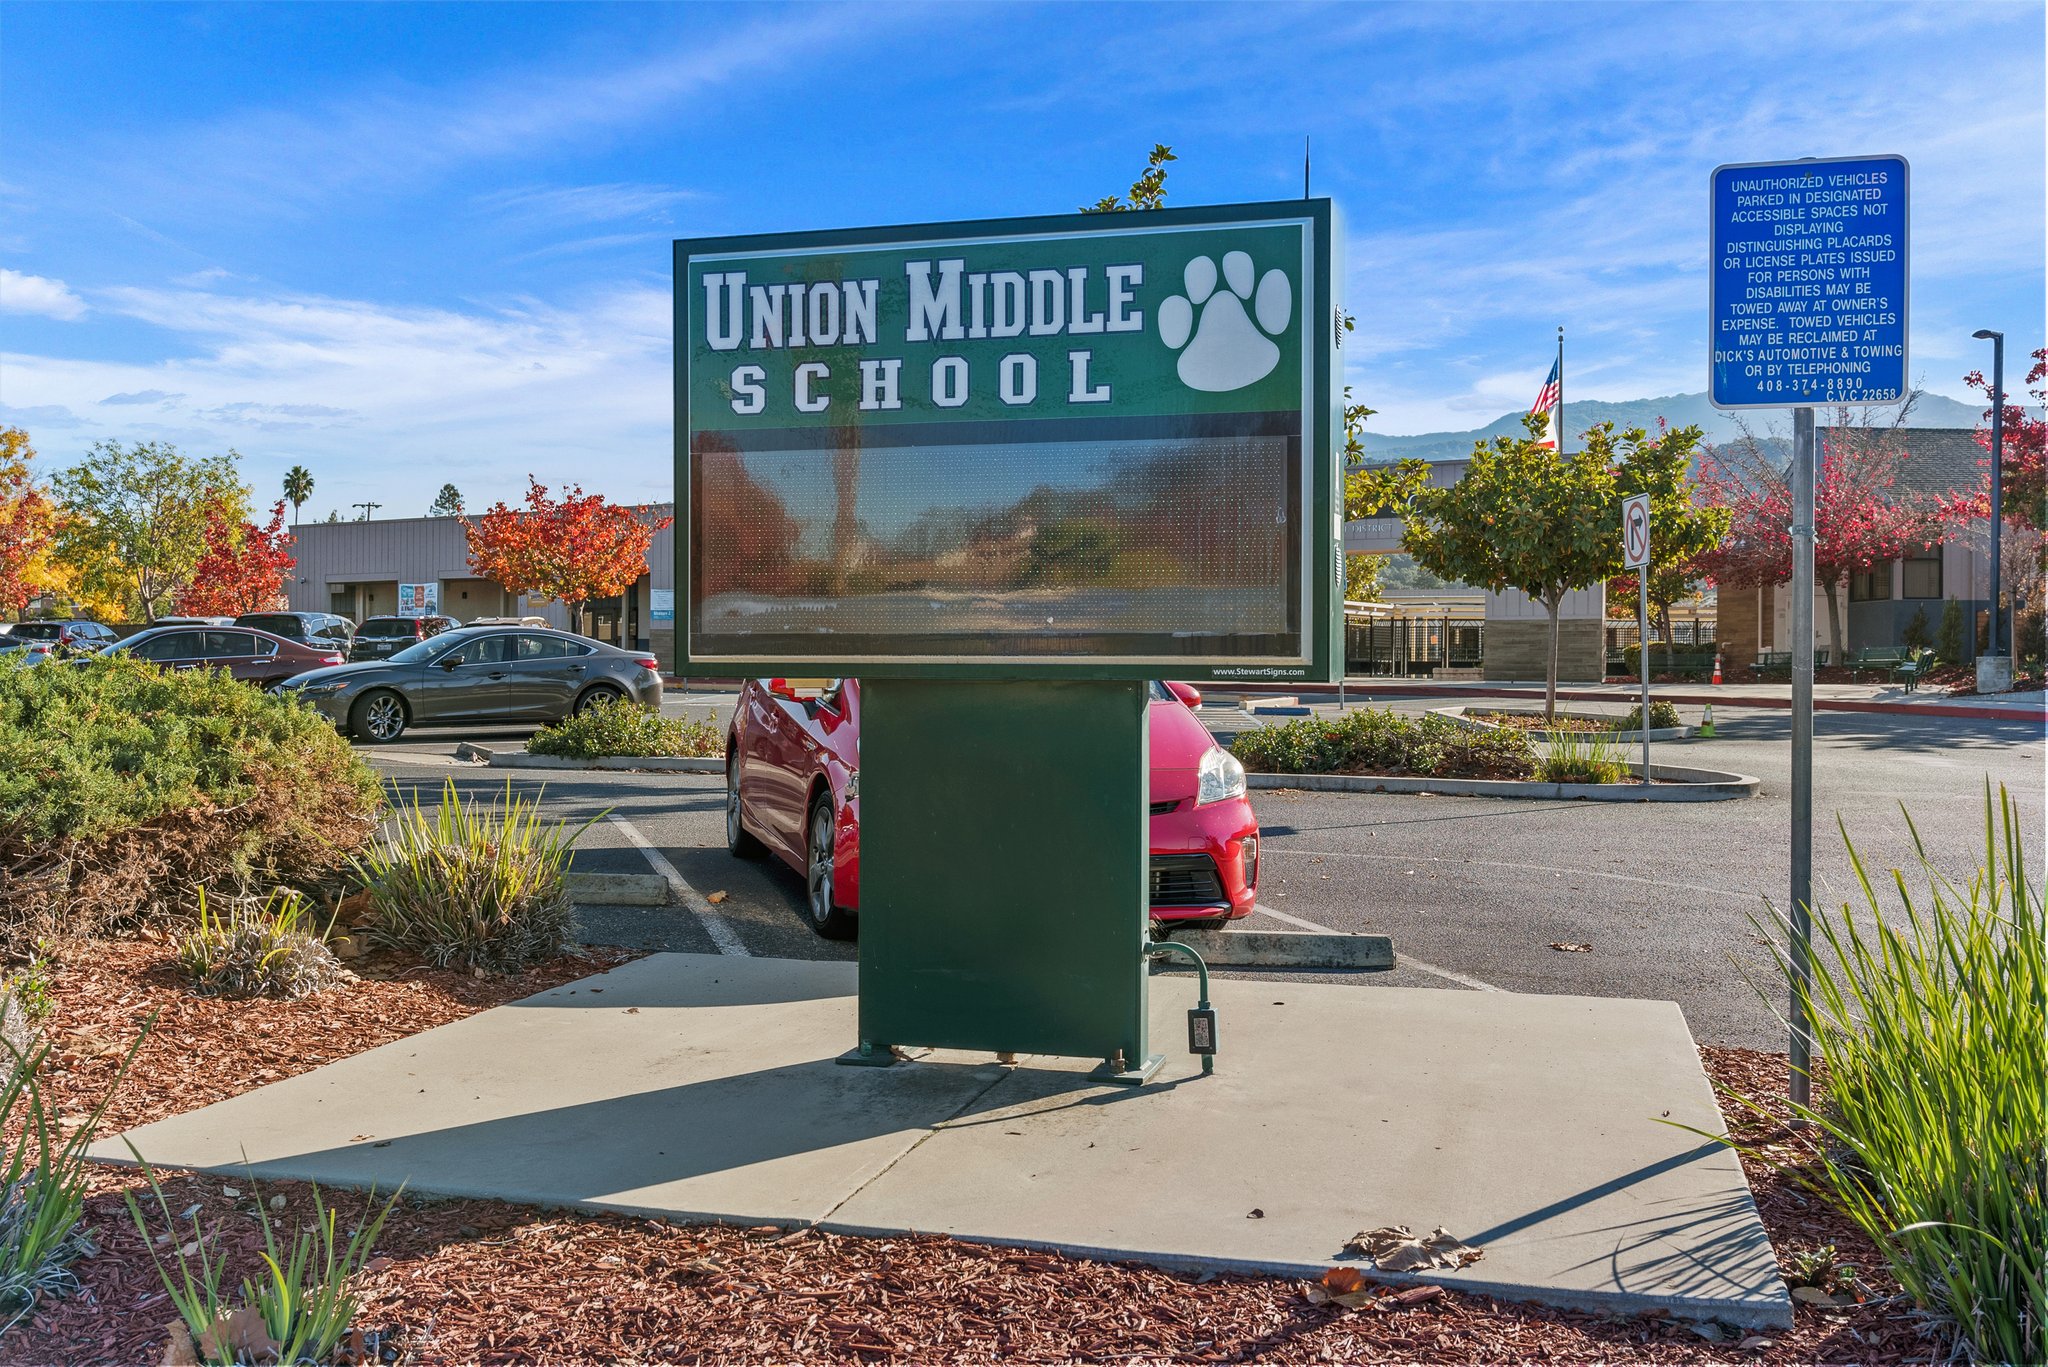 Union Middle School